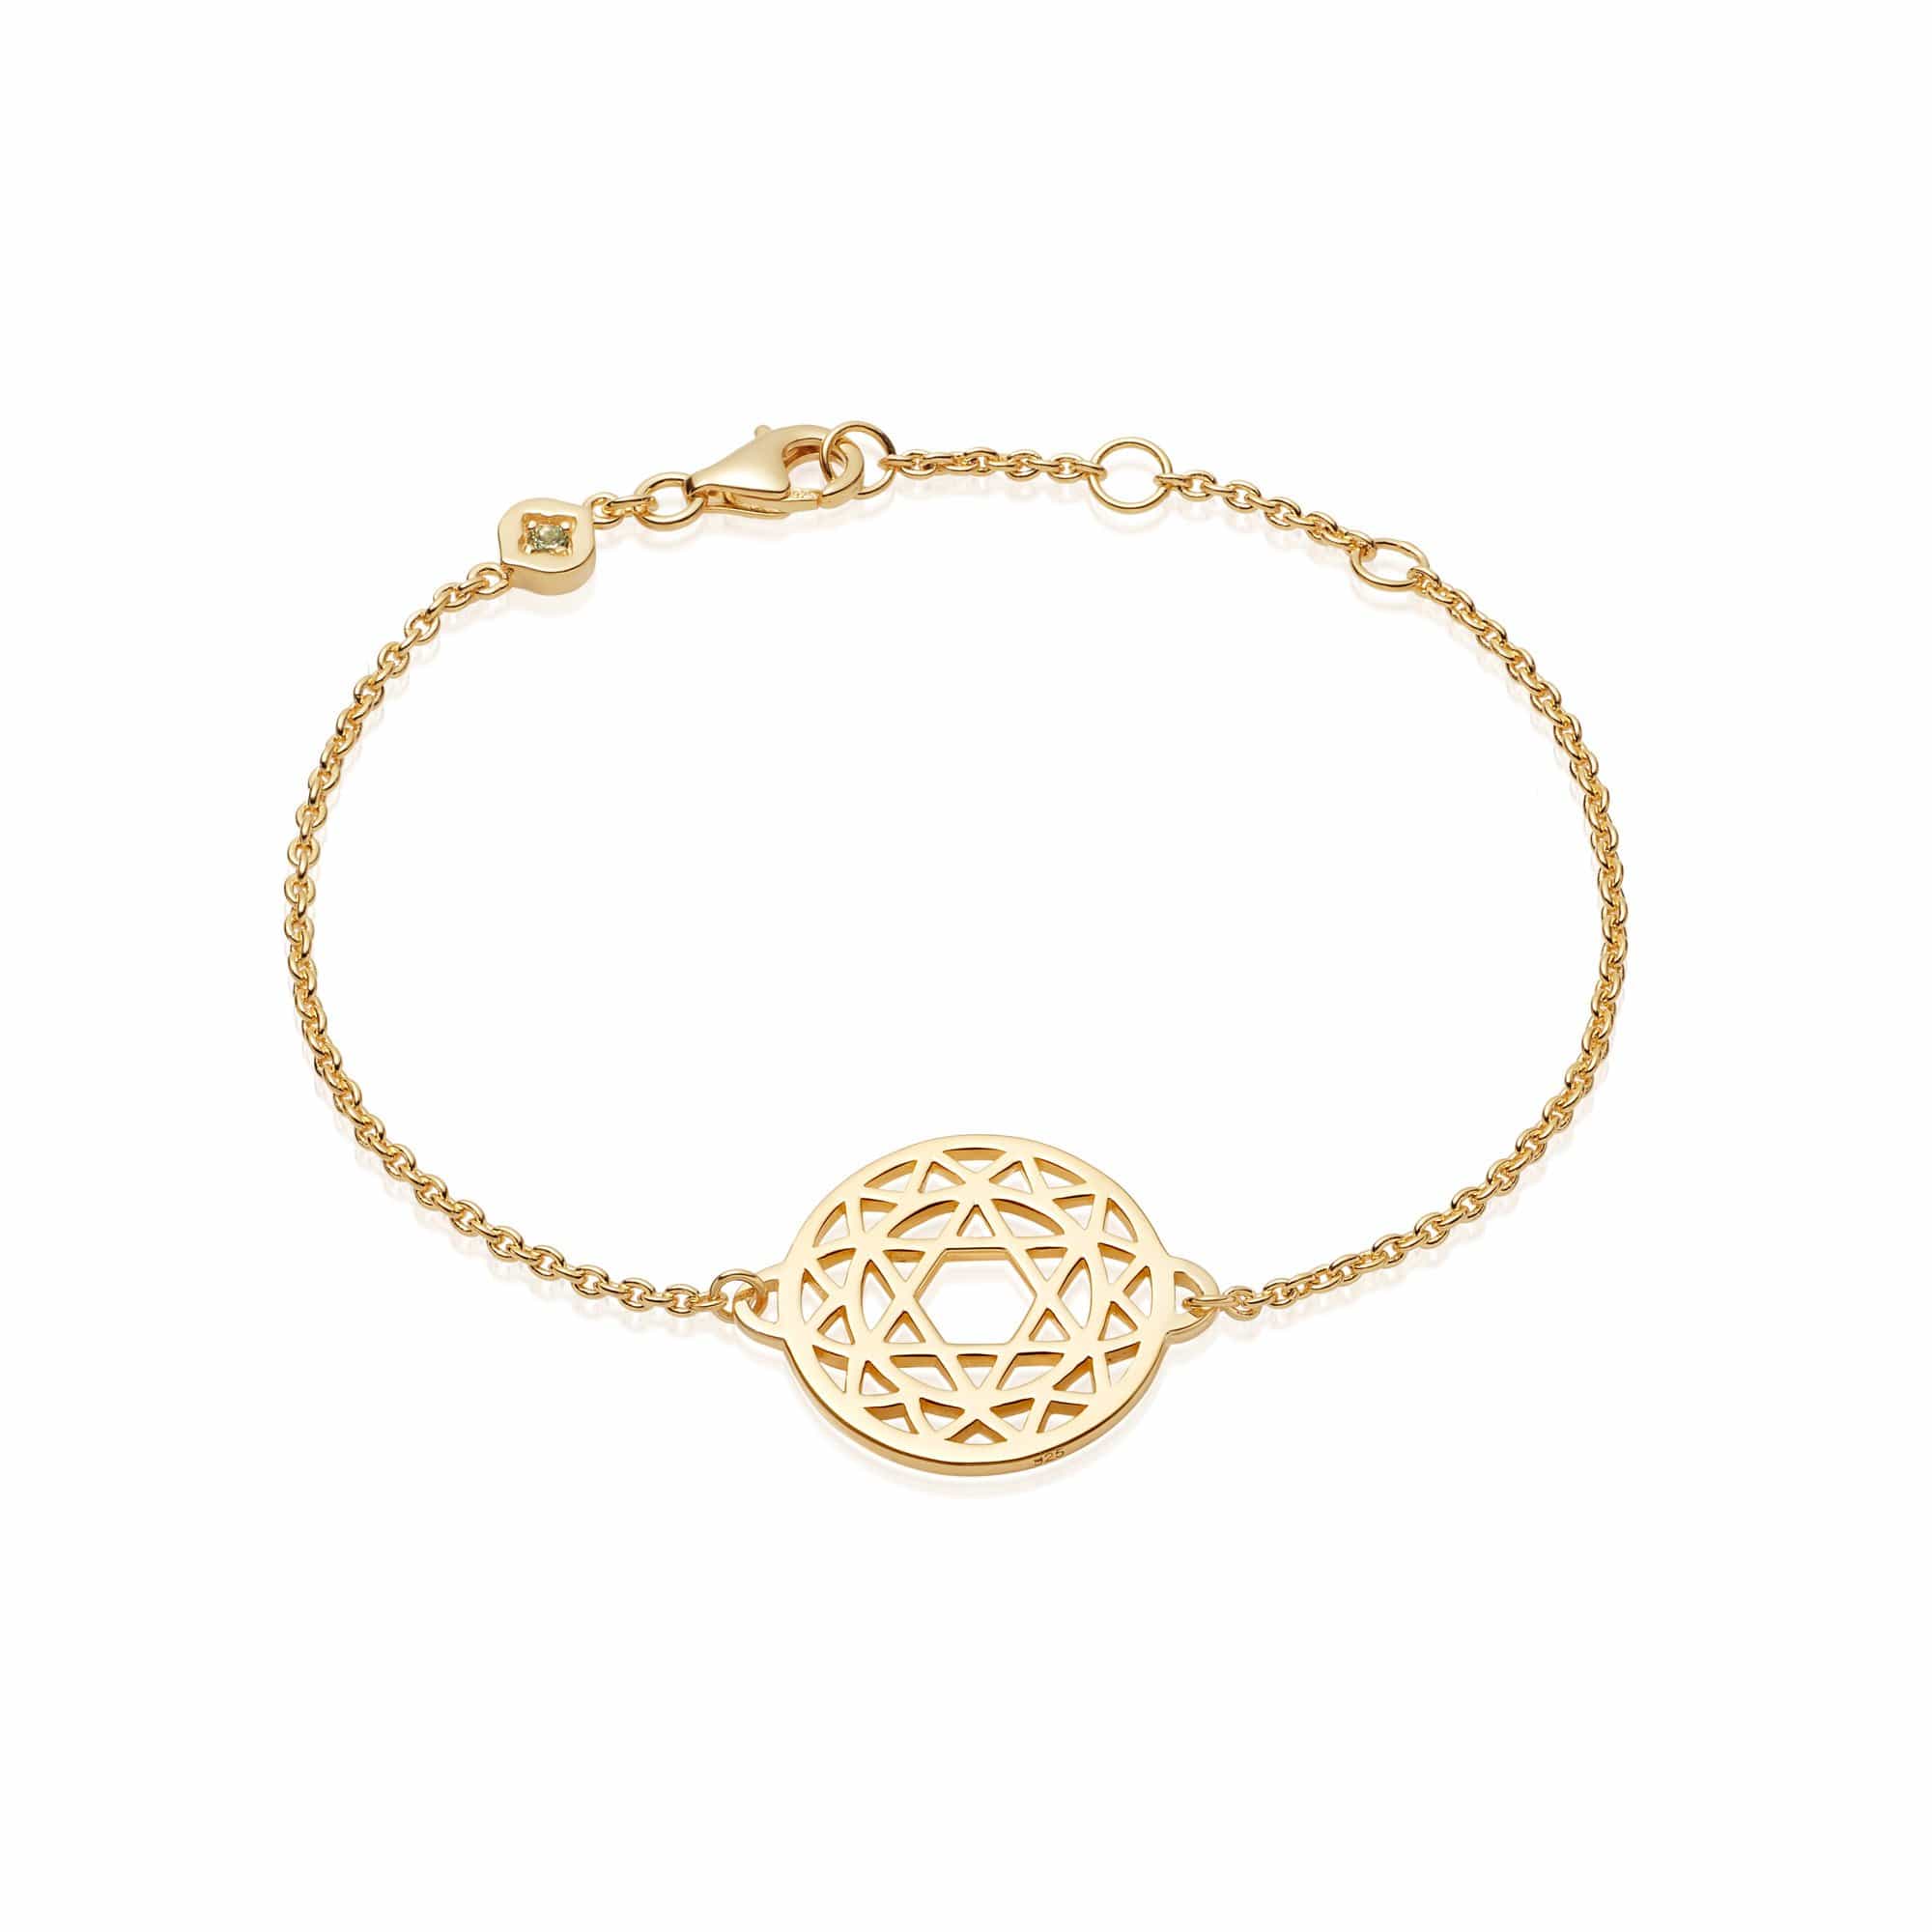 Textured Sunburst Chain Bracelet Sterling Silver – Daisy London